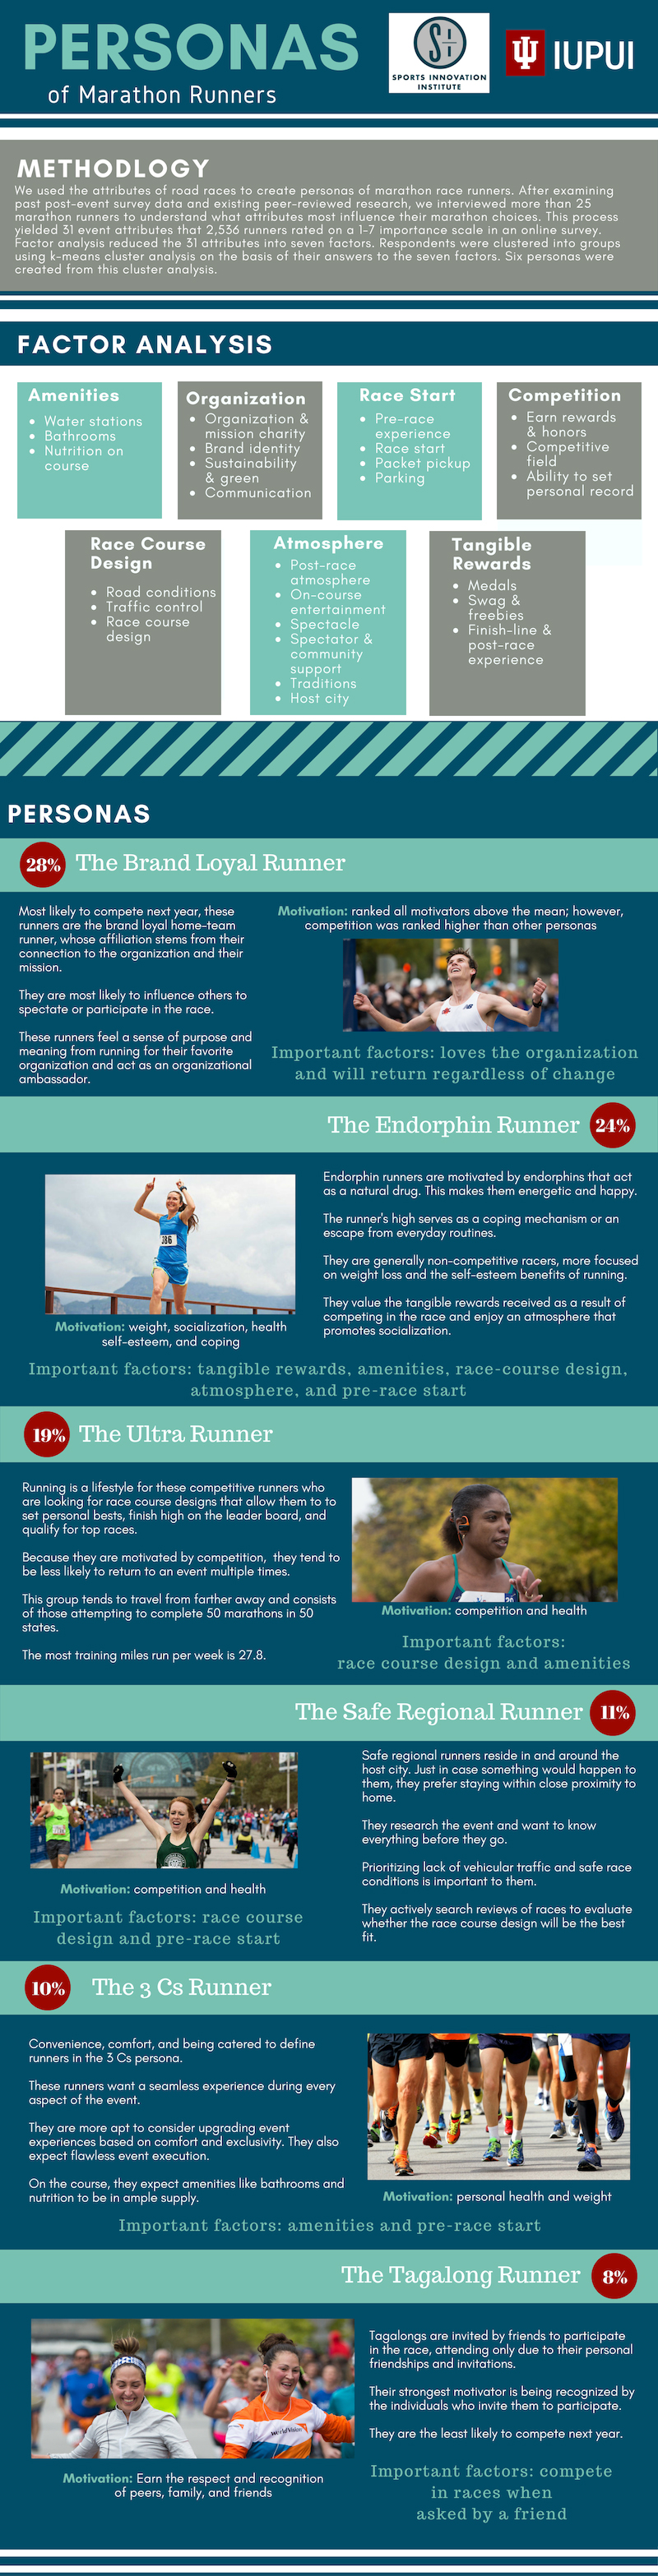 personas of a marathon runner infographic 